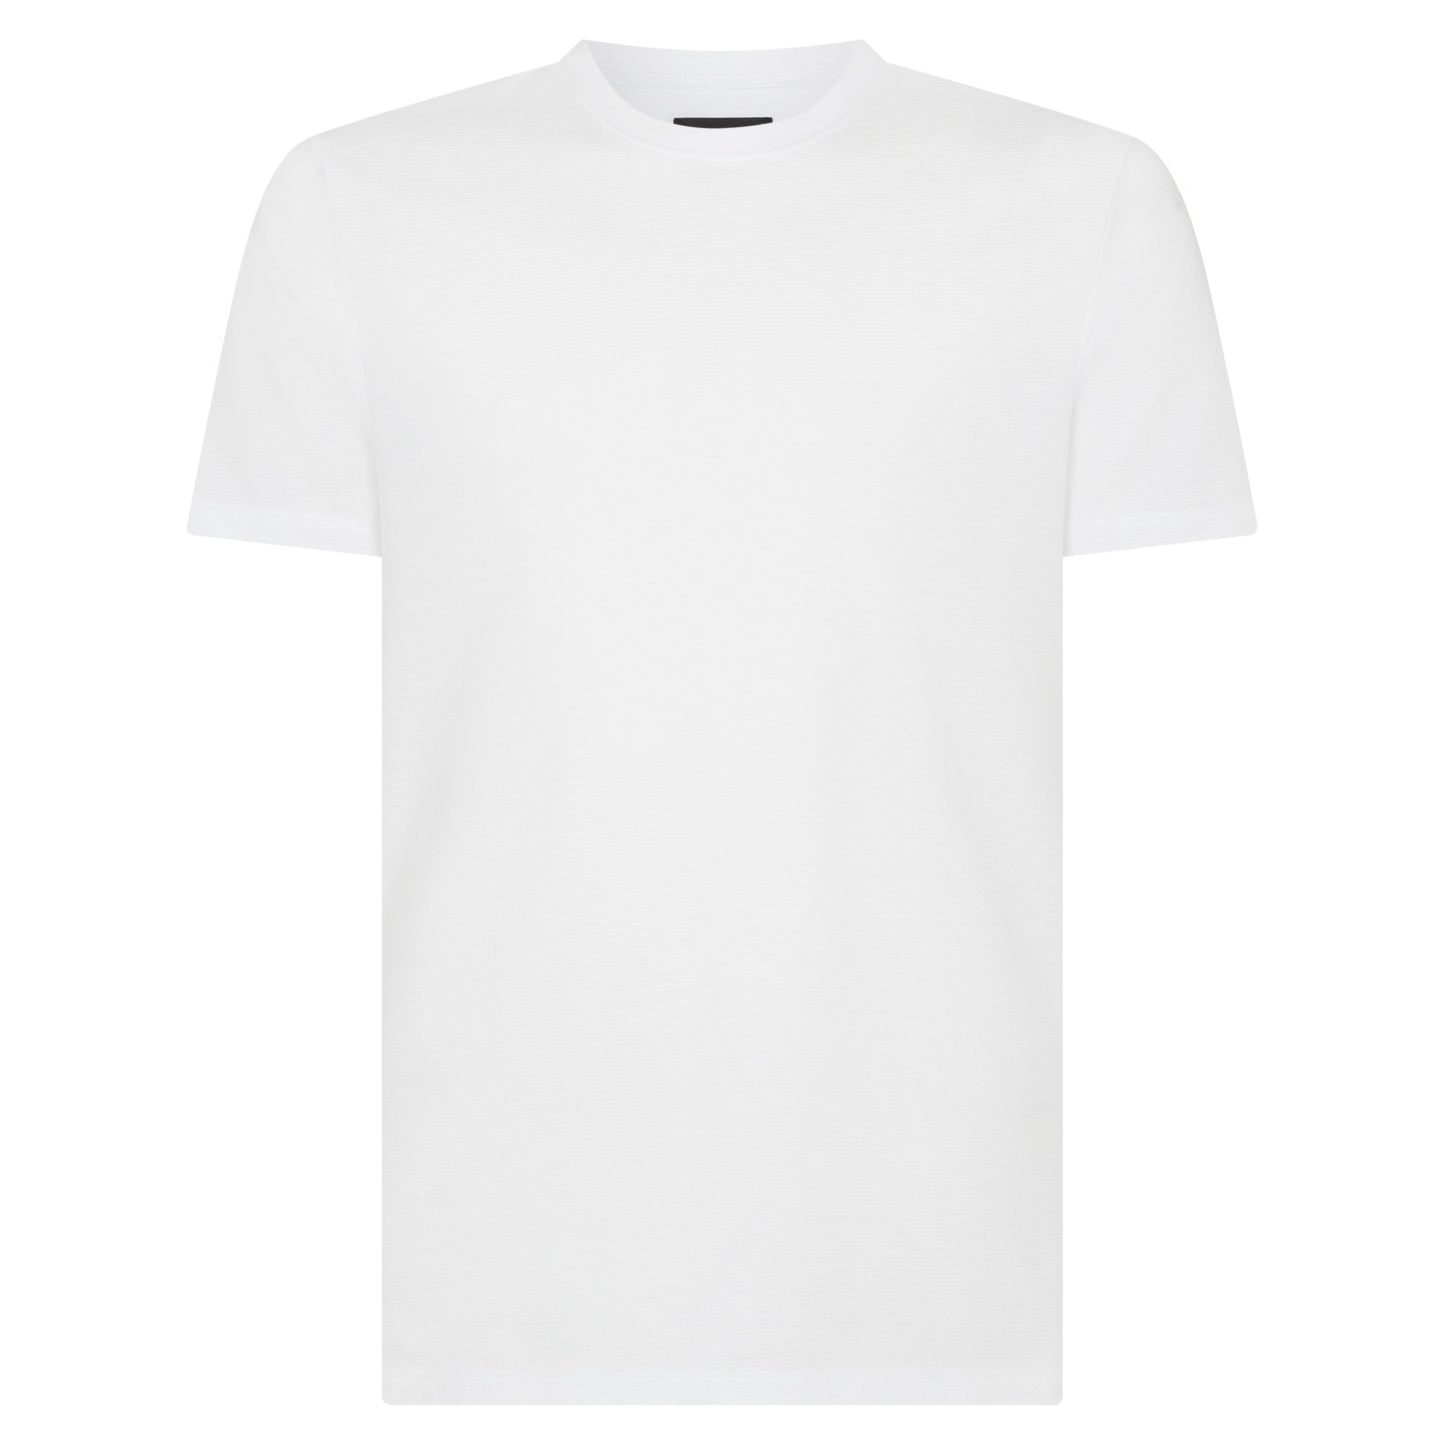 Remus Uomo 58786 01 White T-Shirt